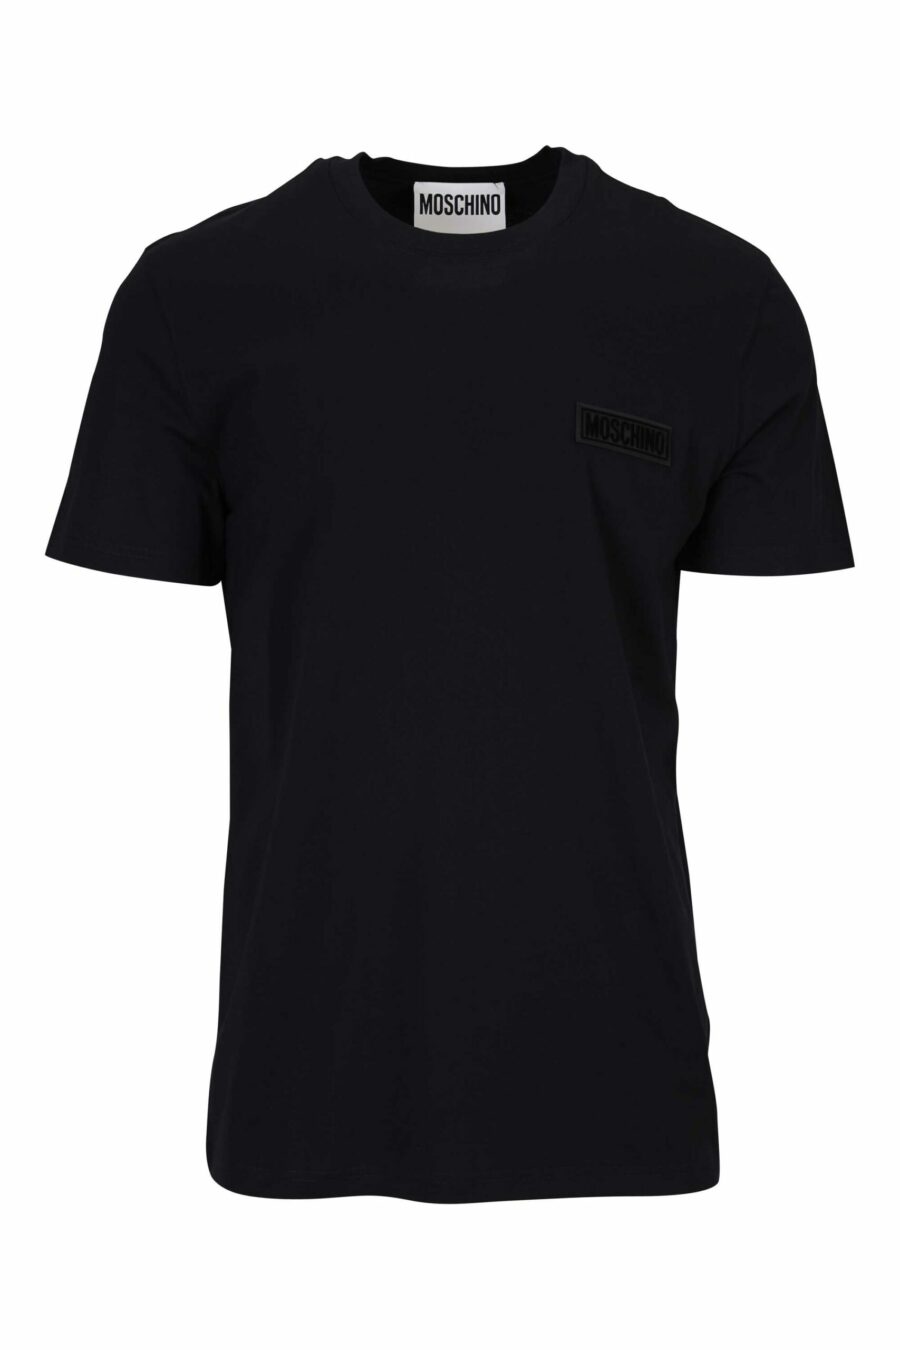 T-shirt noir avec mini-logo blanc - 667113394862 échelle